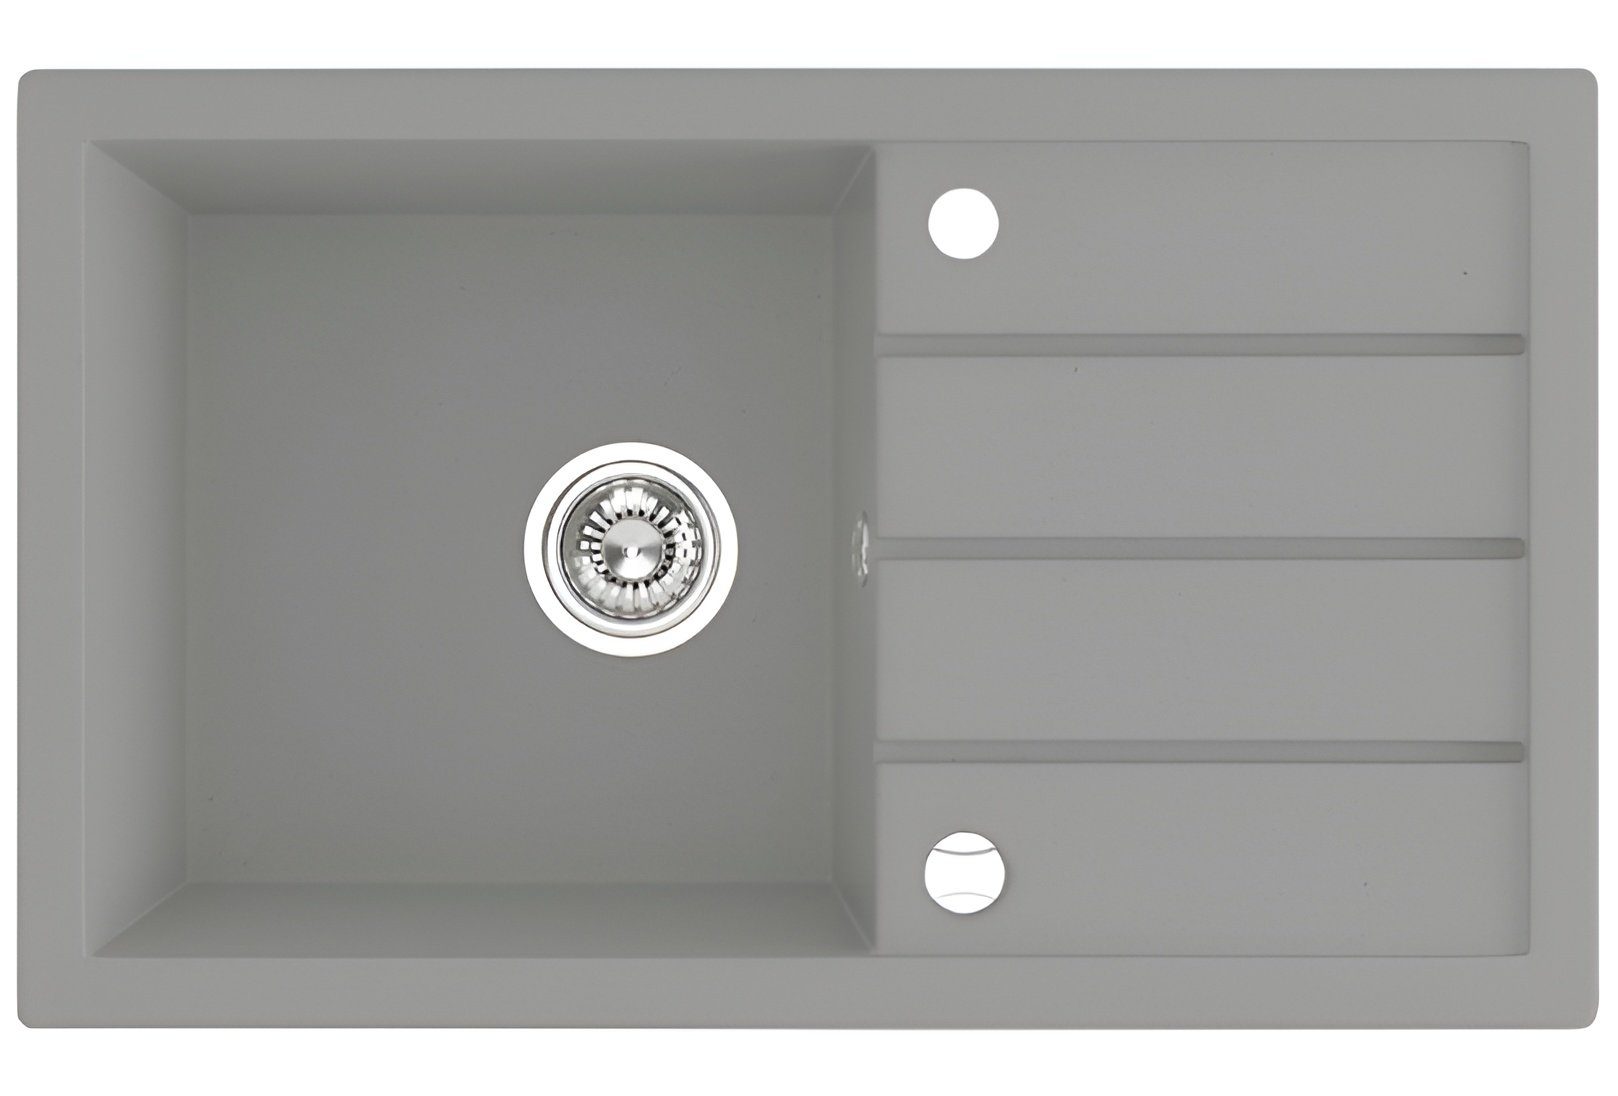 KOLMAN Küchenspüle Einzelbecken T.III Granitspüle, Rechteckig, 48/79 cm, Grau, Space Saving Siphon GRATIS